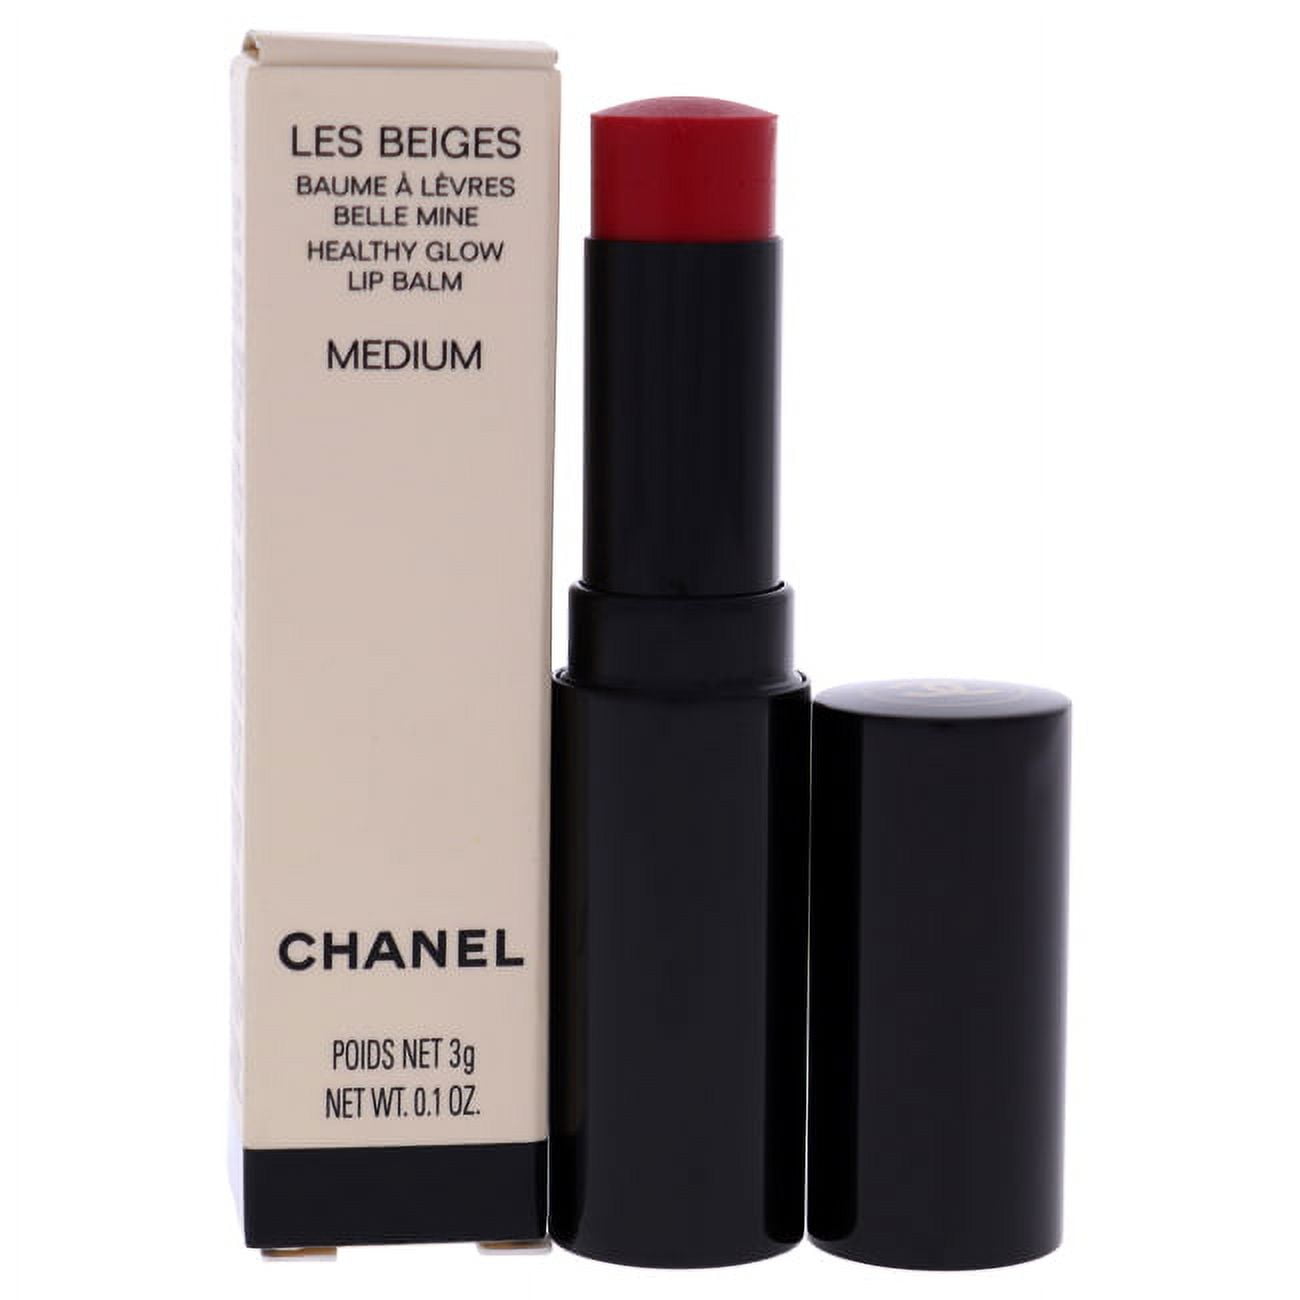 Les Beiges Healthy Glow Lip Balm - Medium by Chanel for Women - 0.1 oz  Lipstick